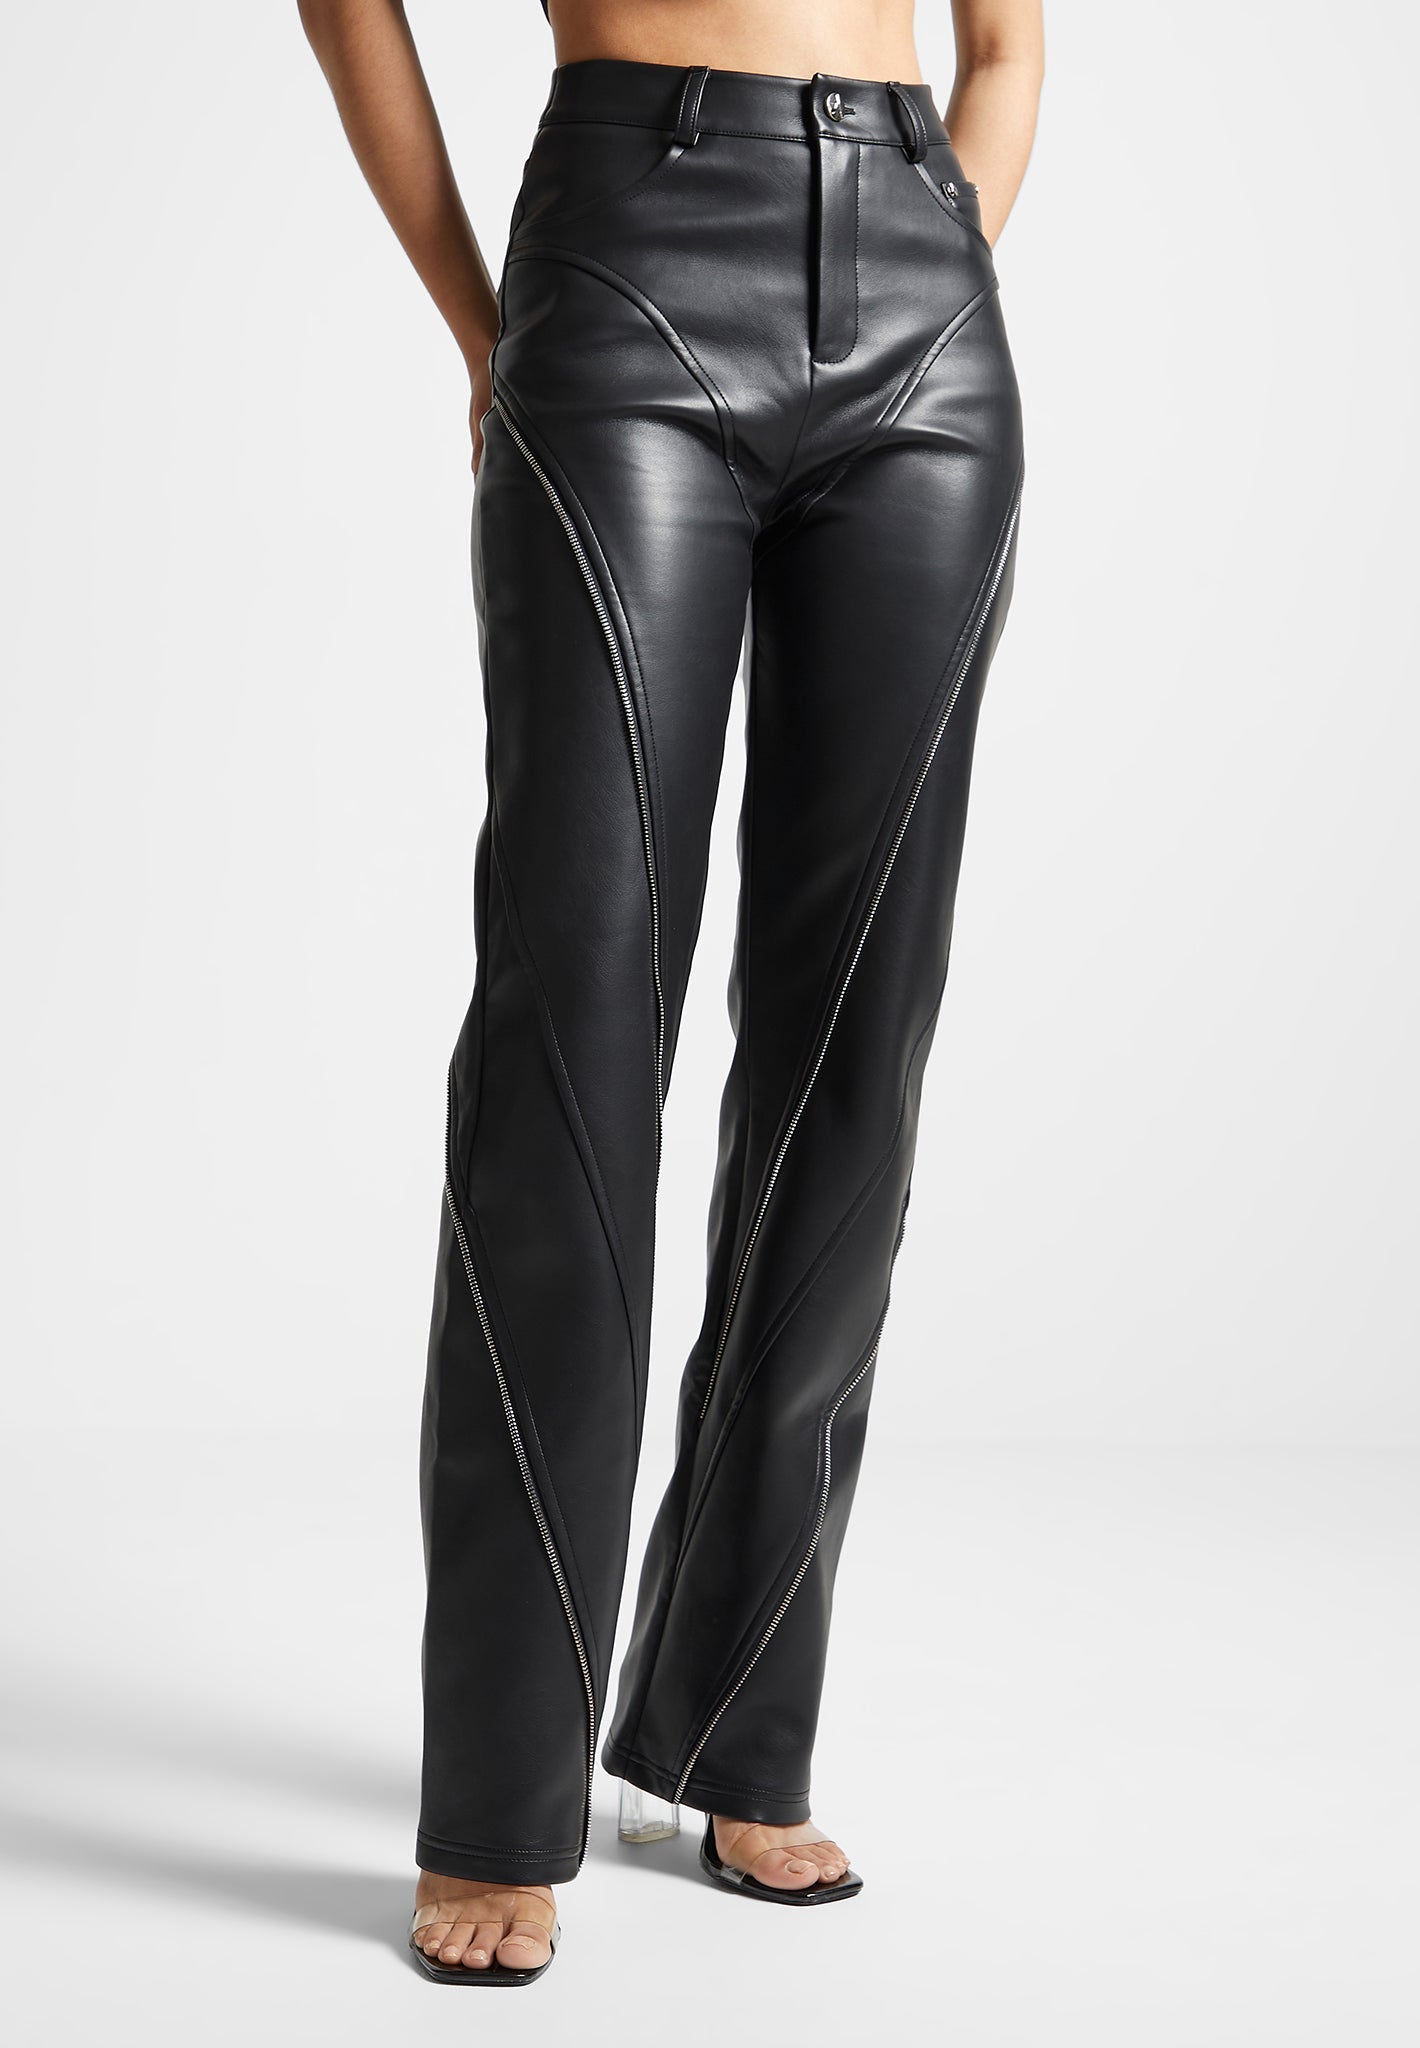 Aenar Pants women Pants-faux Leather-black Pants-avantgarde-street High  Fashion-women Street Wear-unique Women Clothing-designer Pants 